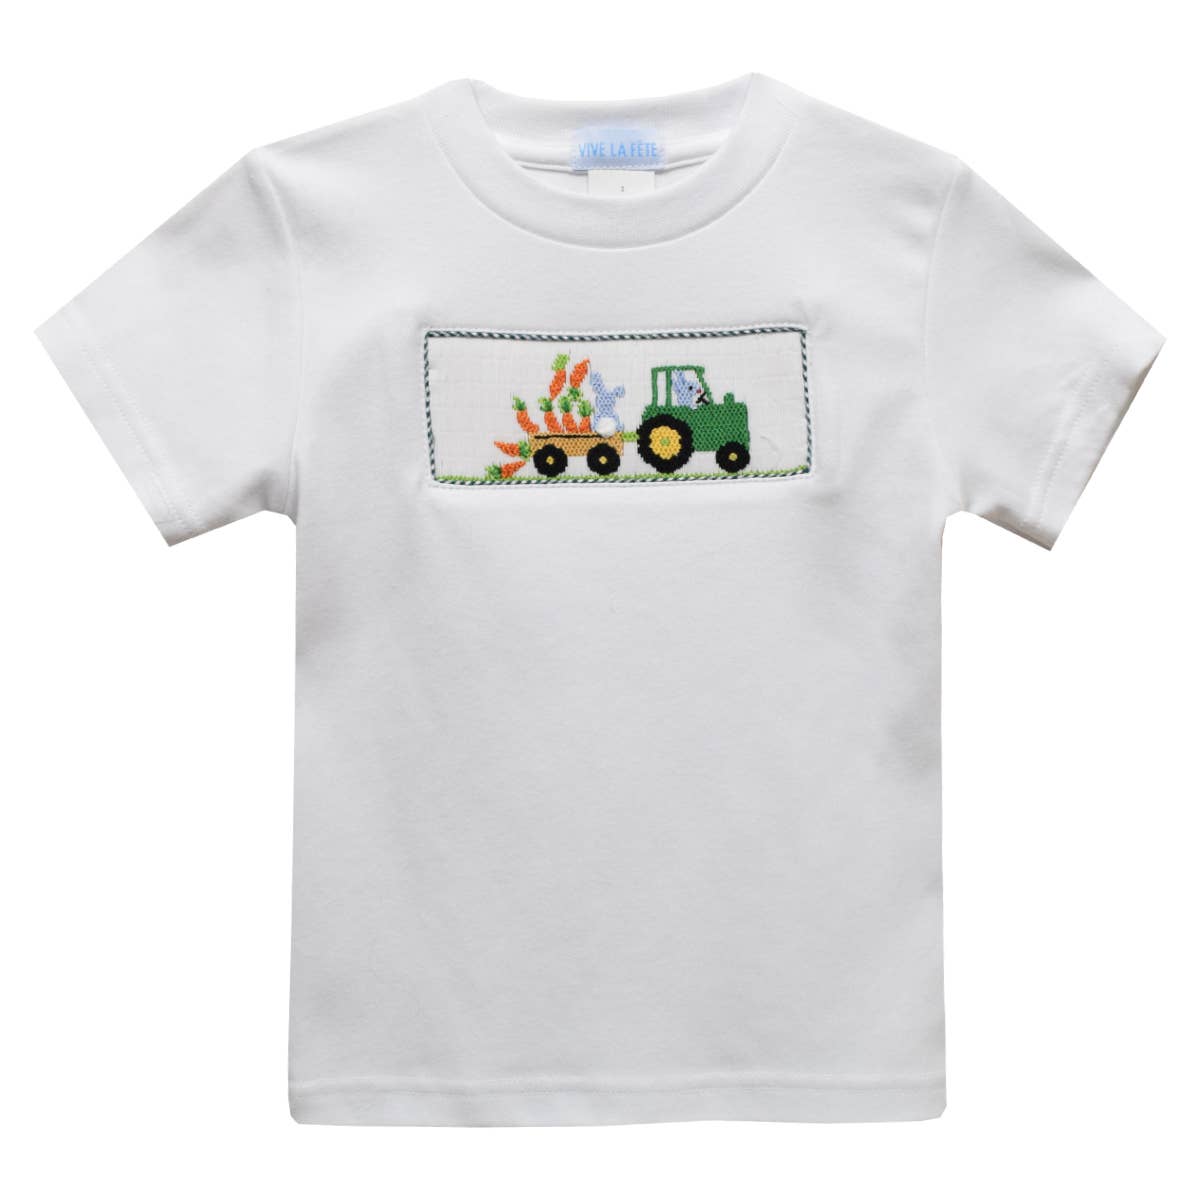 Vive La Fete - Rabbit & Tractor Smocked Knit Short Sleeve Boys T-Shirt